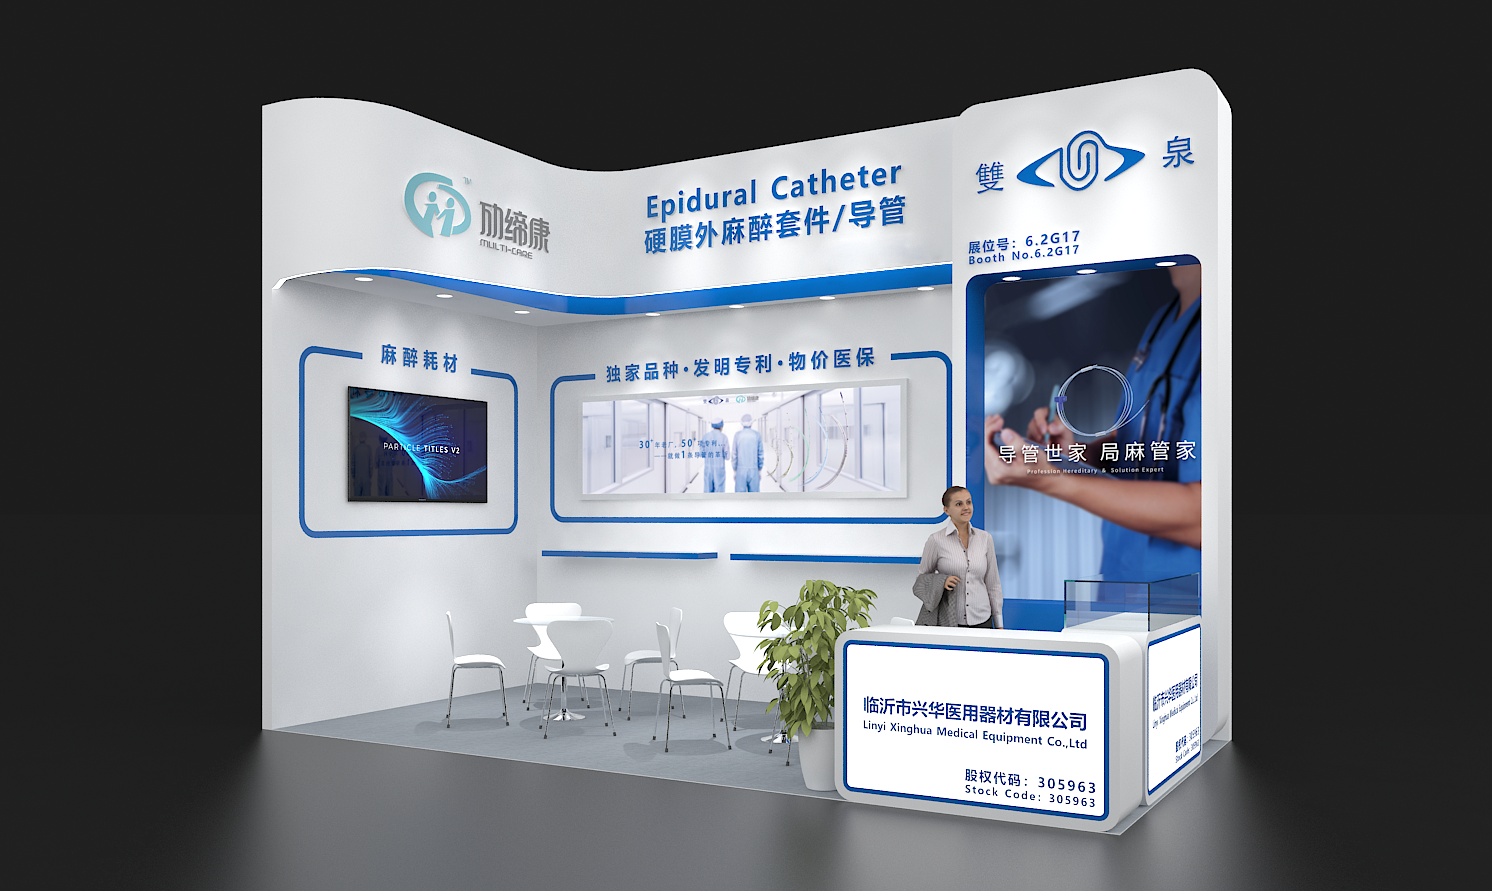 The 89th China International Medical Equipment Fair